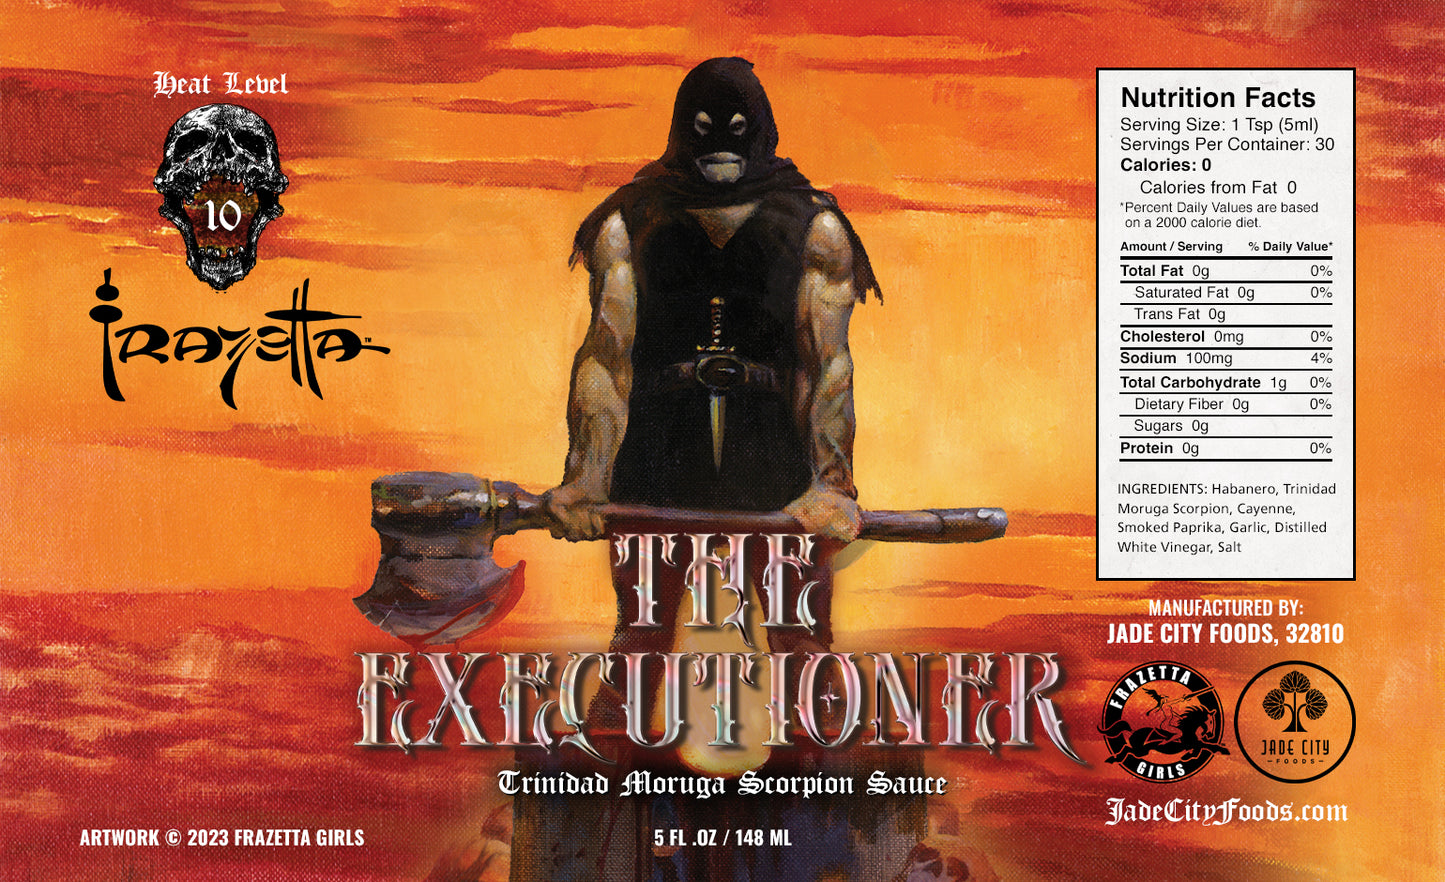 The Executioner: Trinidad Moruga Scorpion Sauce